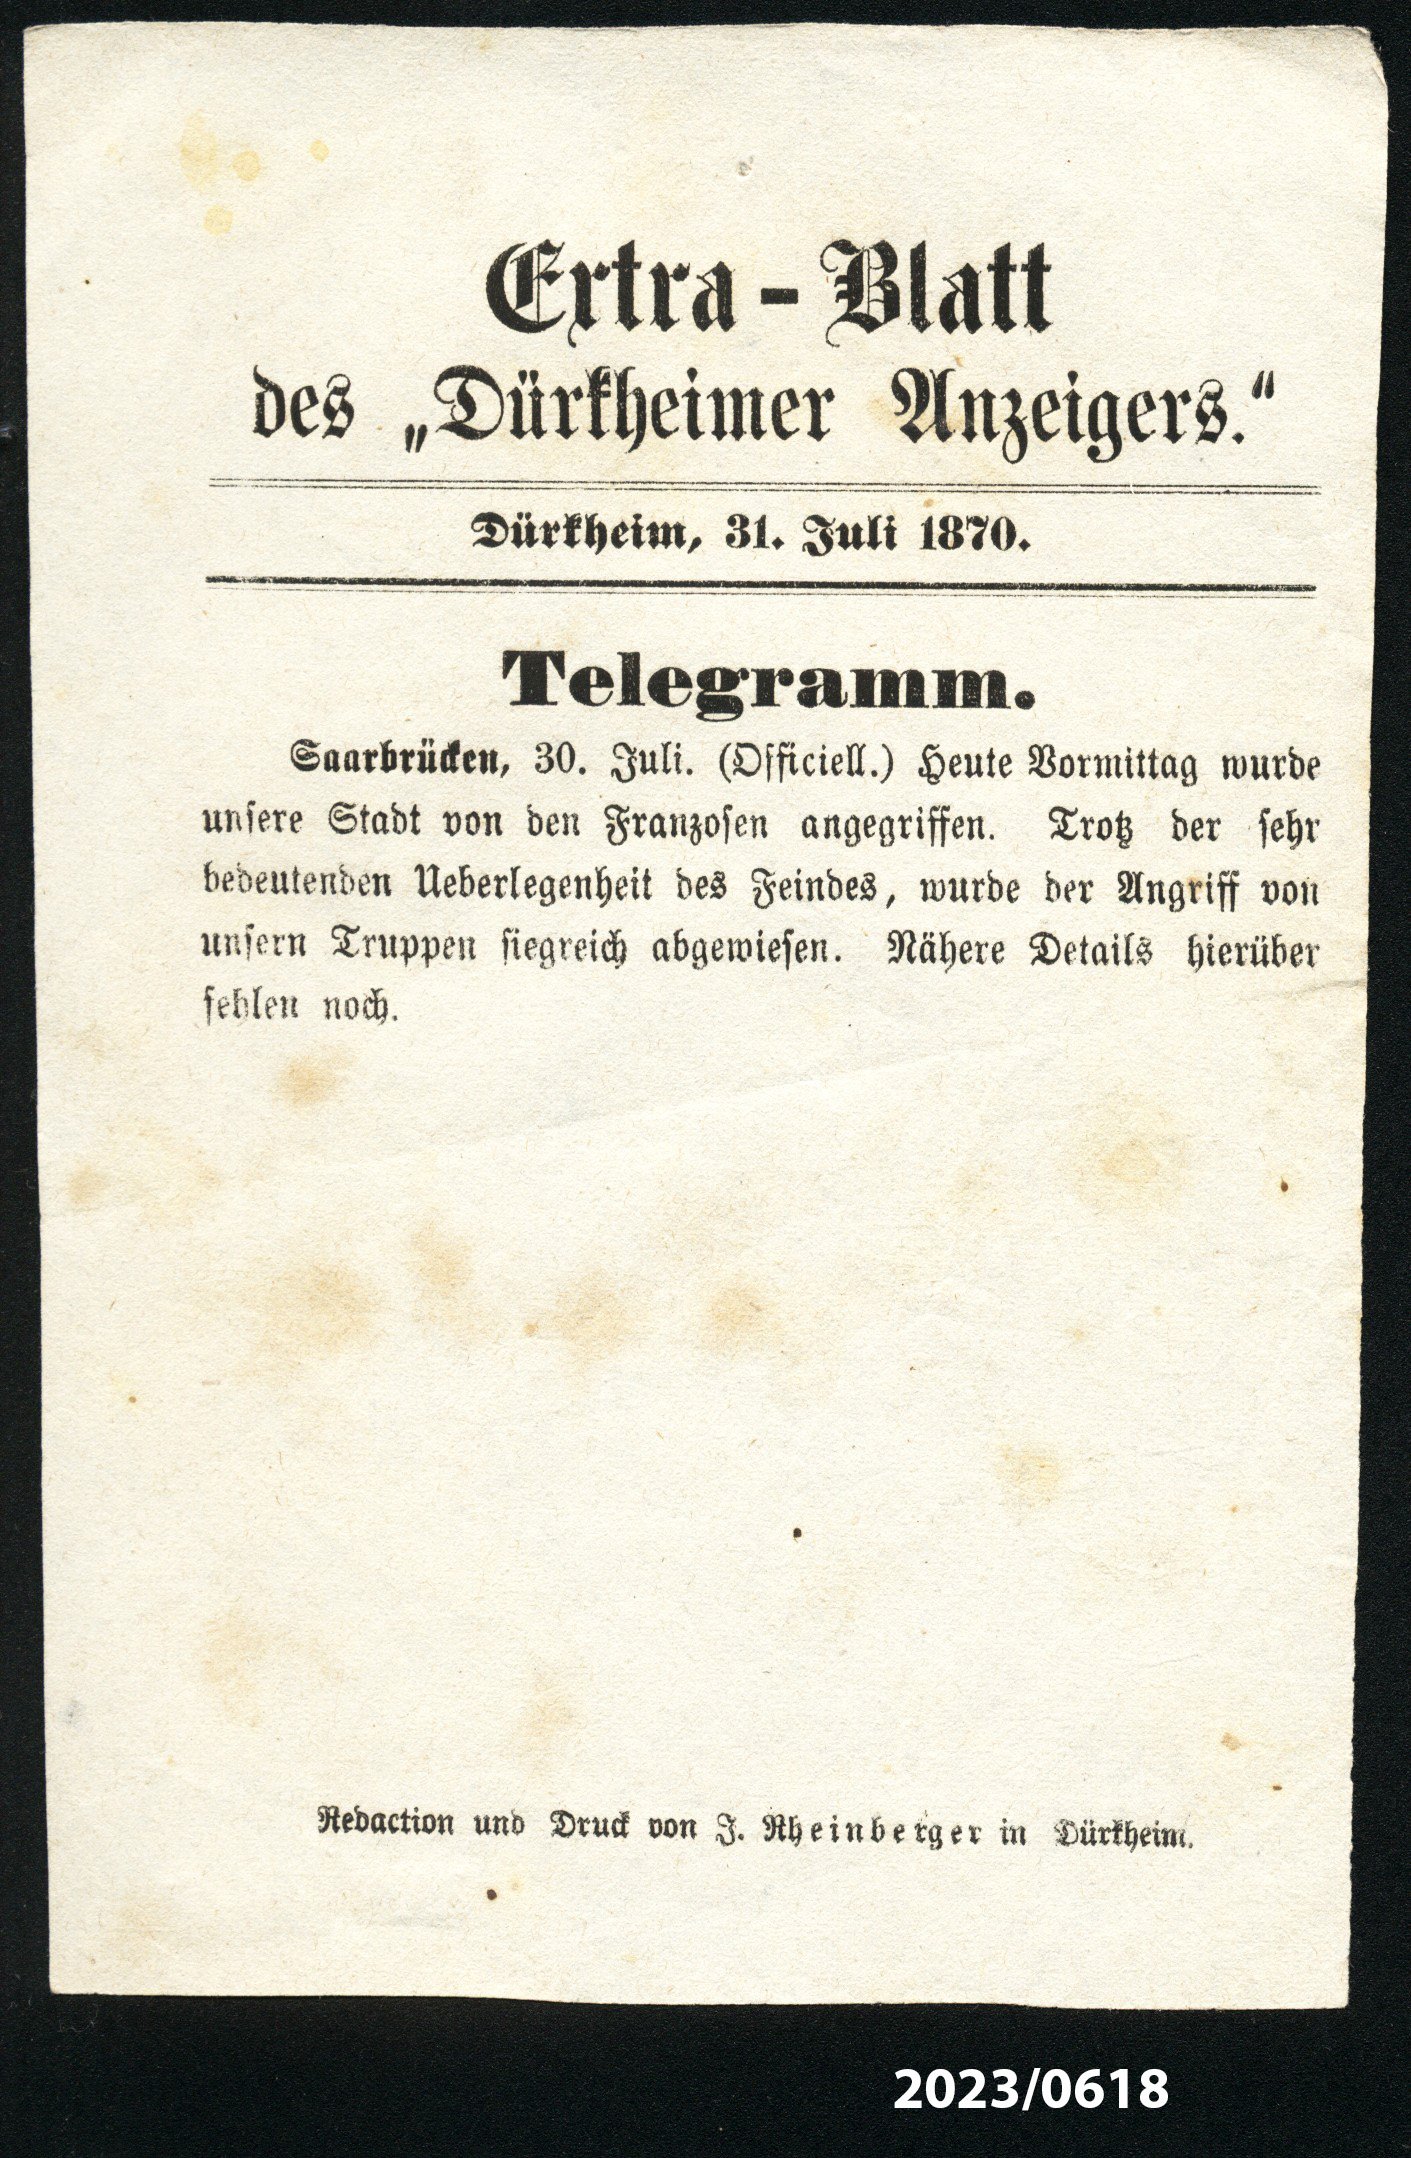 Extra-Blatt des "Dürkheimer Anzeigers" 31.7.1870 (Stadtmuseum Bad Dürkheim im Kulturzentrum Haus Catoir CC BY-NC-SA)